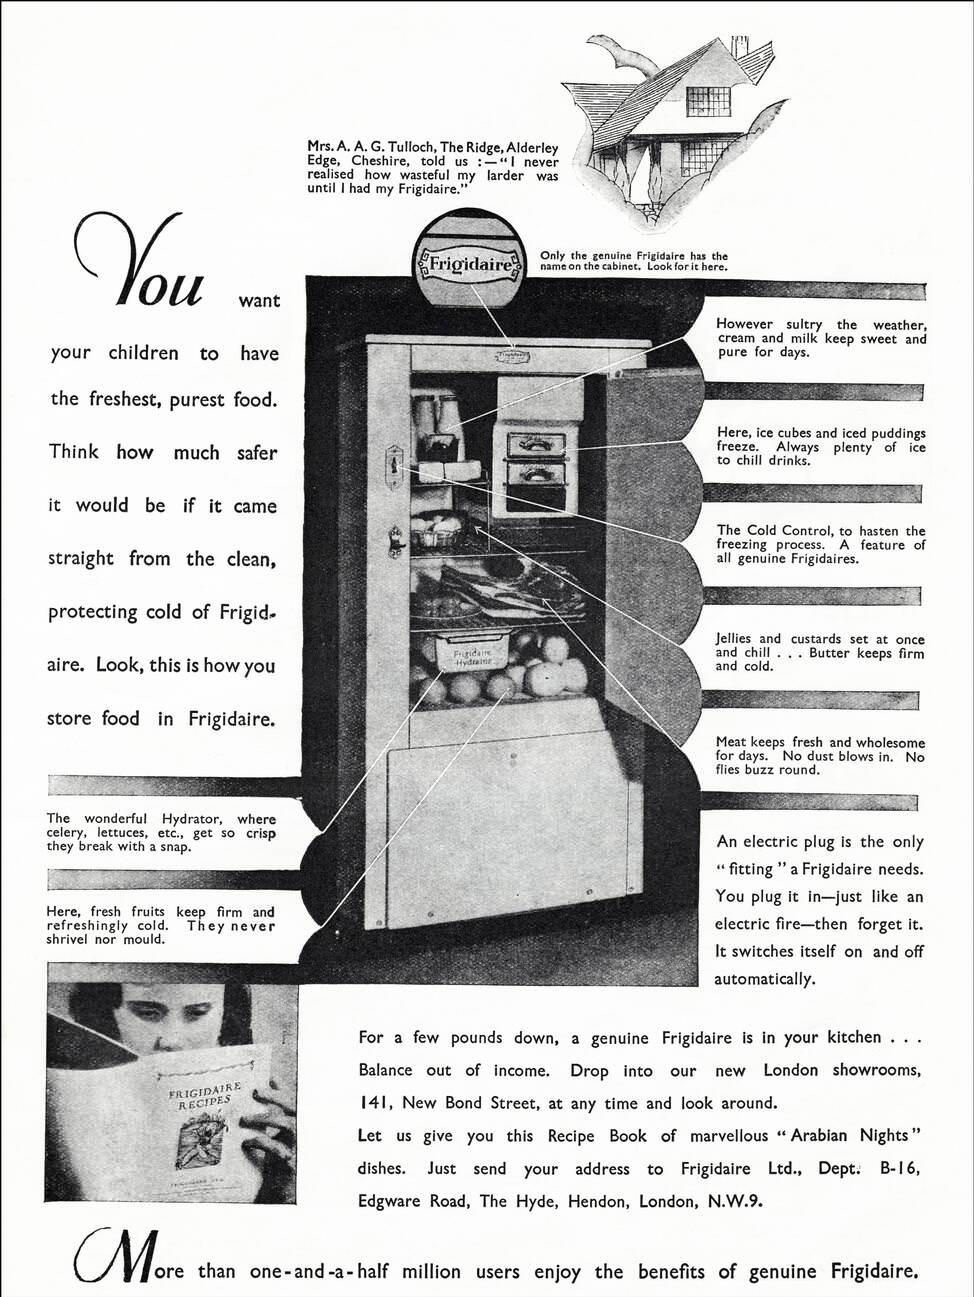 Frigidaire refrigerators ad, 1930s.